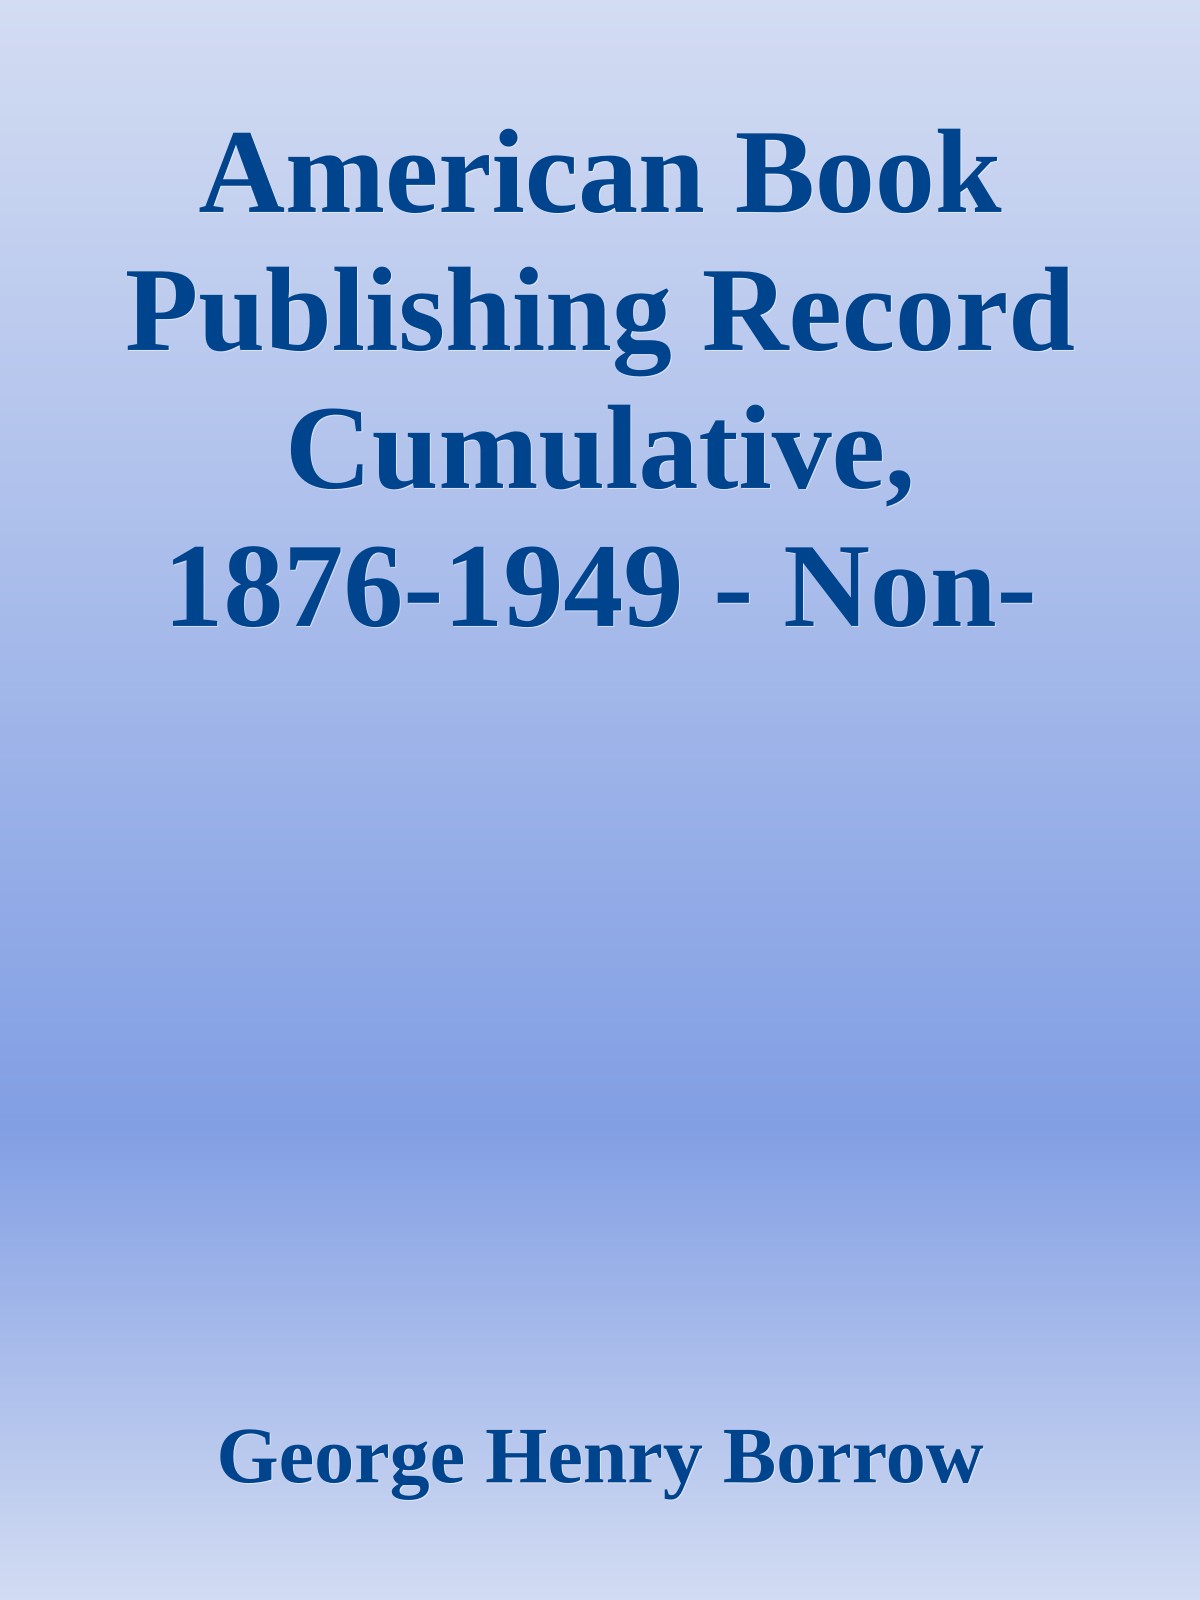 American Book Publishing Record Cumulative, 1876-1949 - Non-Dewey decimal classified titles